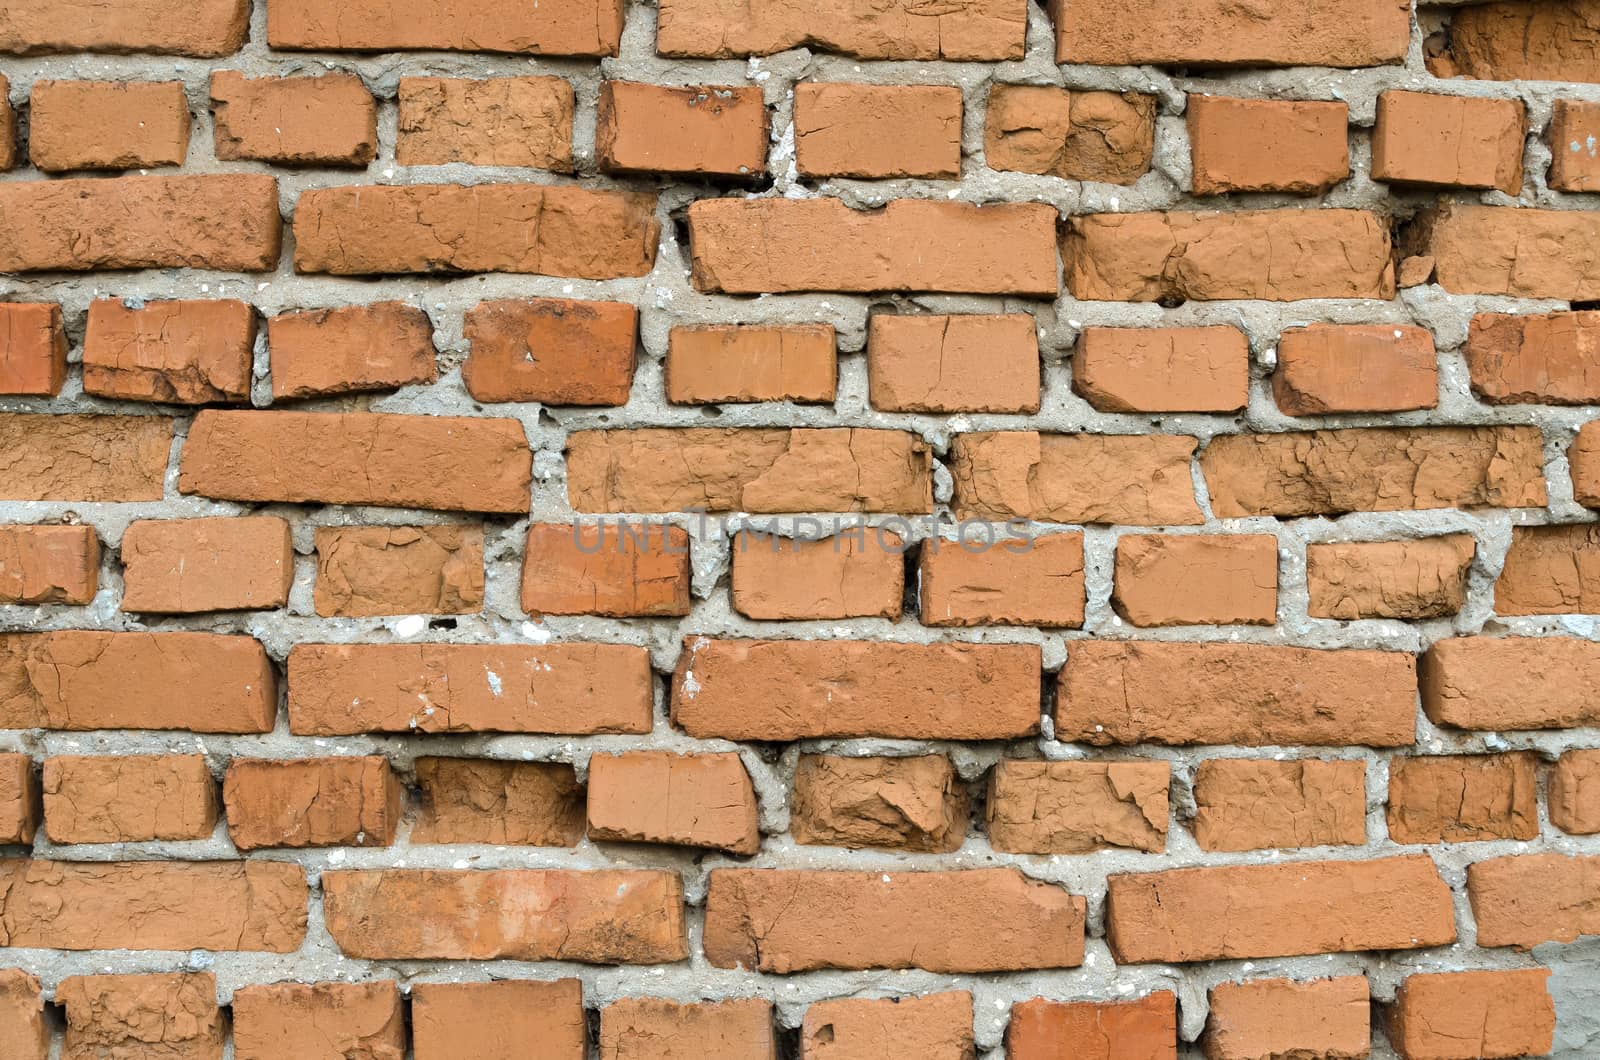 Antique brick, textured background by Gaina